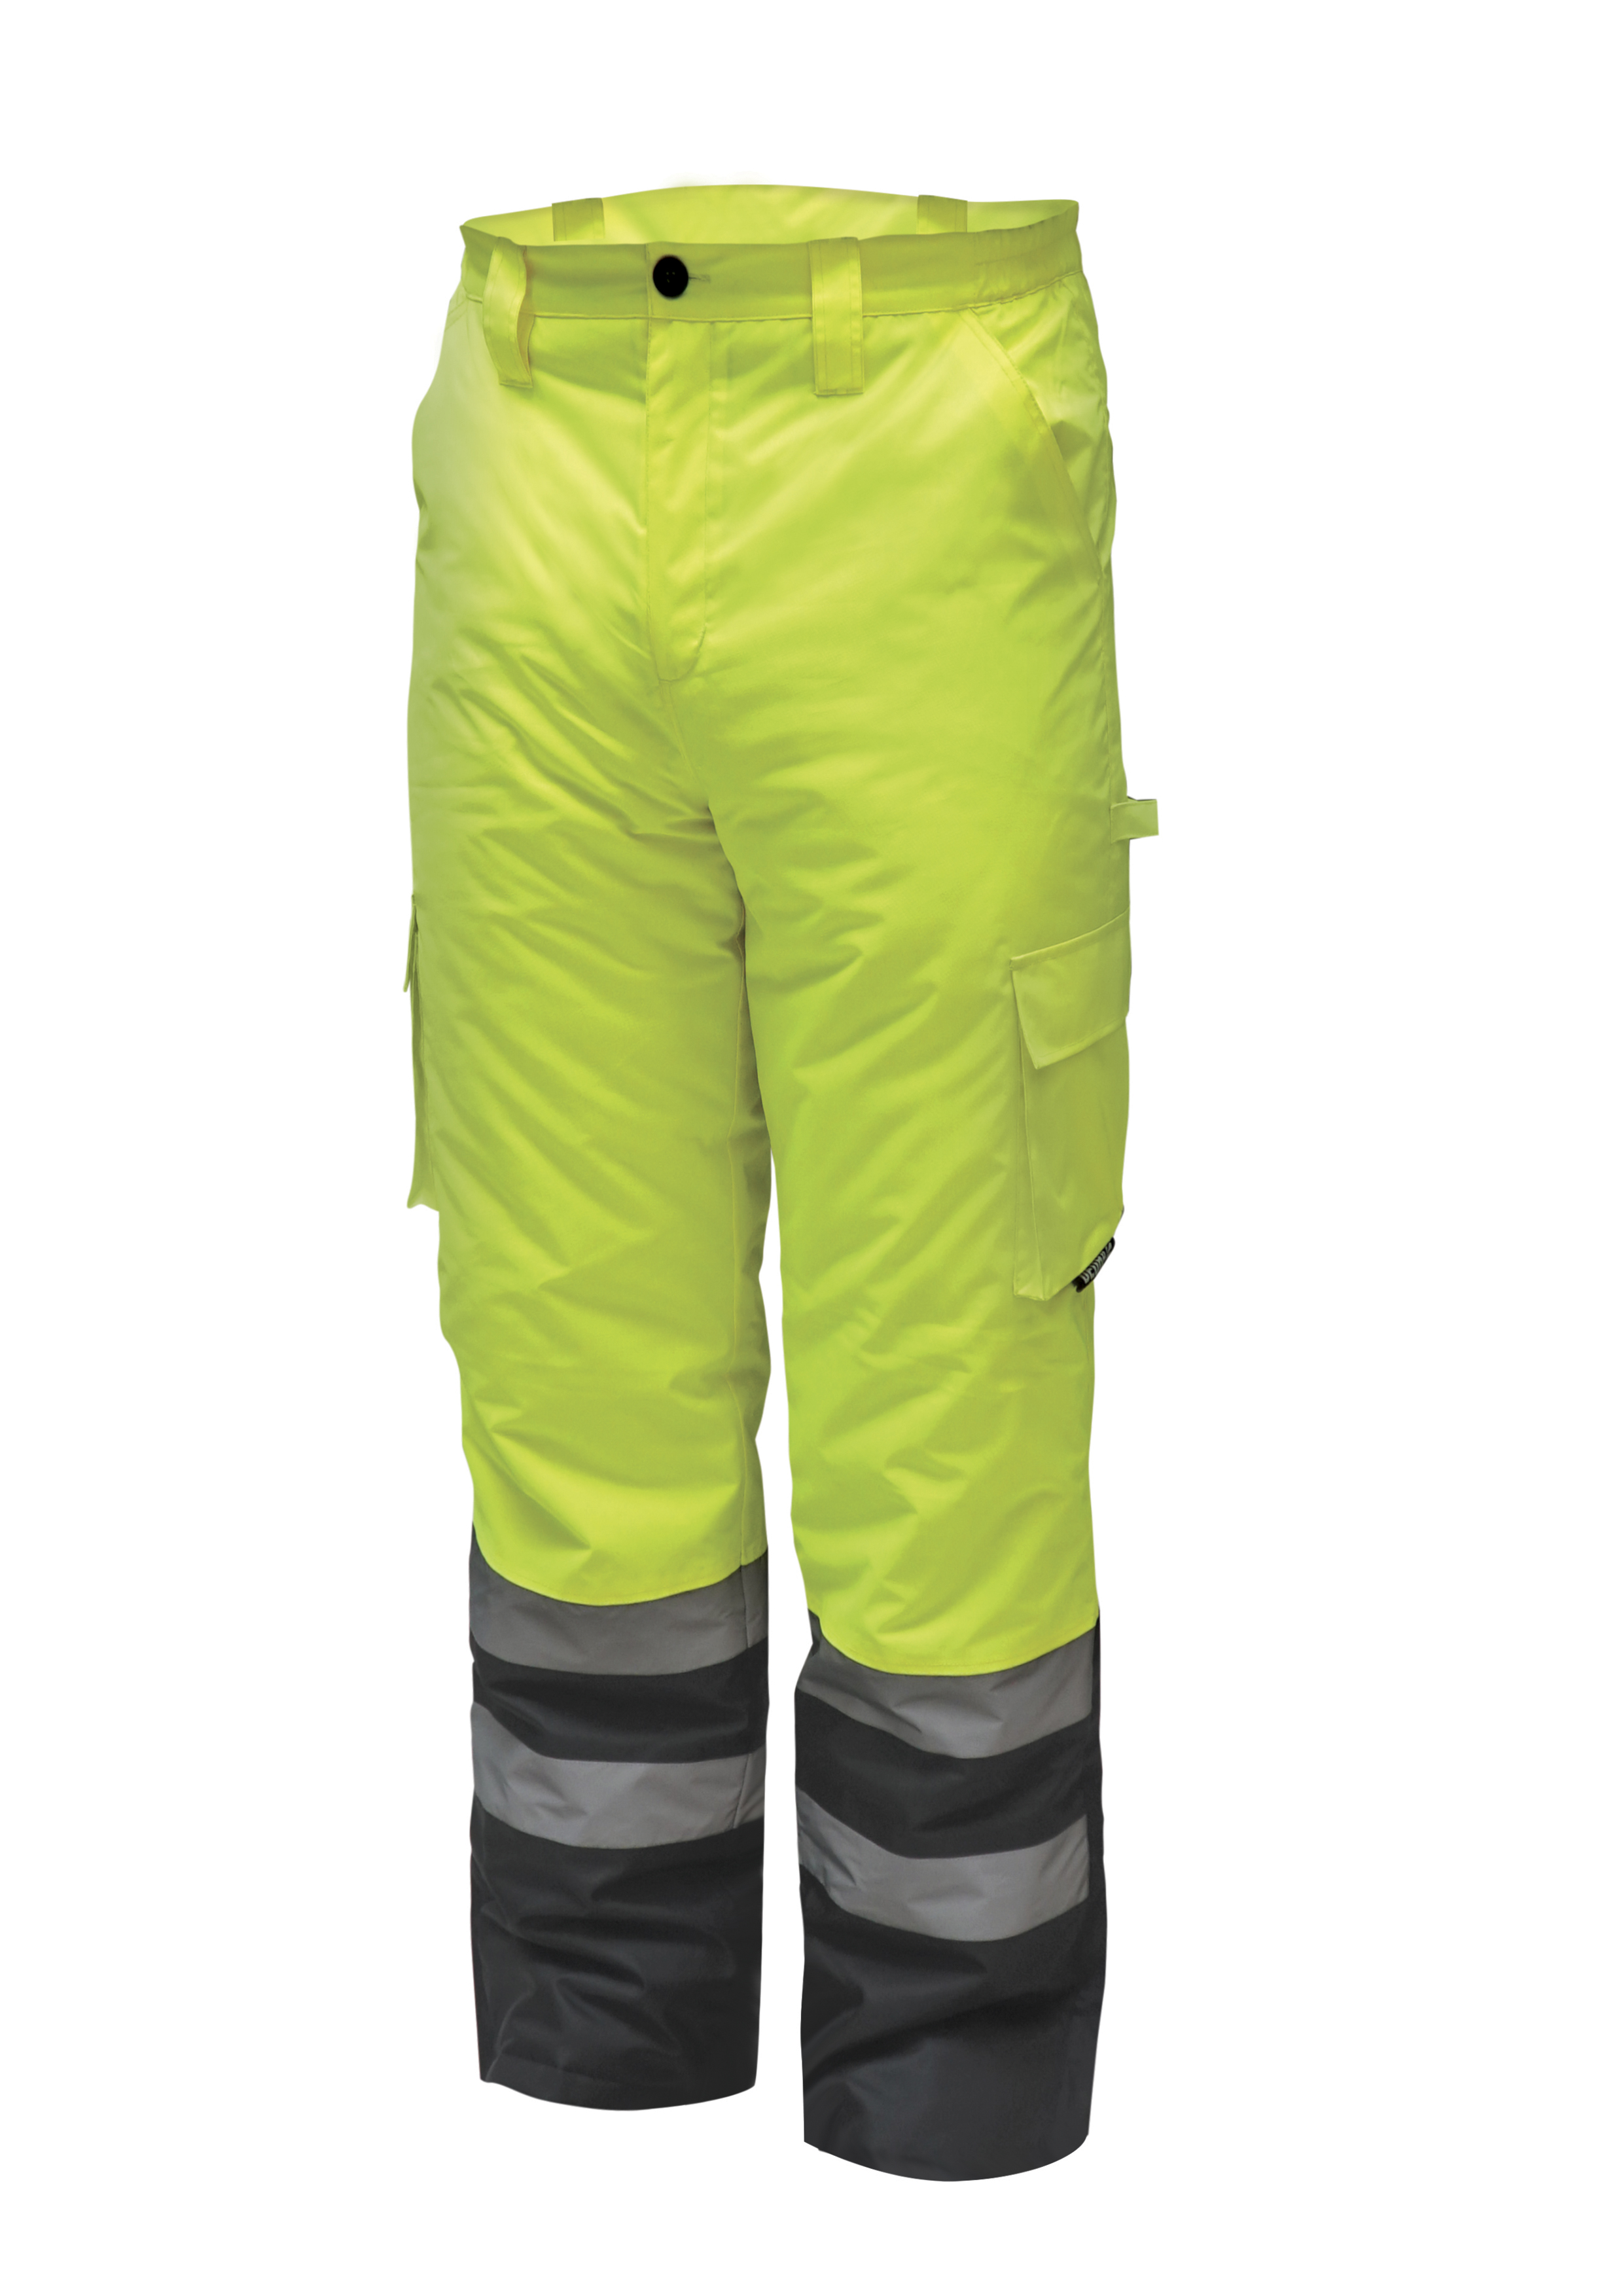 Reflexní zateplené kalhoty vel. XXXL, žluté DEDRA BH80SP1-XXXL + Dárek, servis bez starostí v hodnotě 300Kč